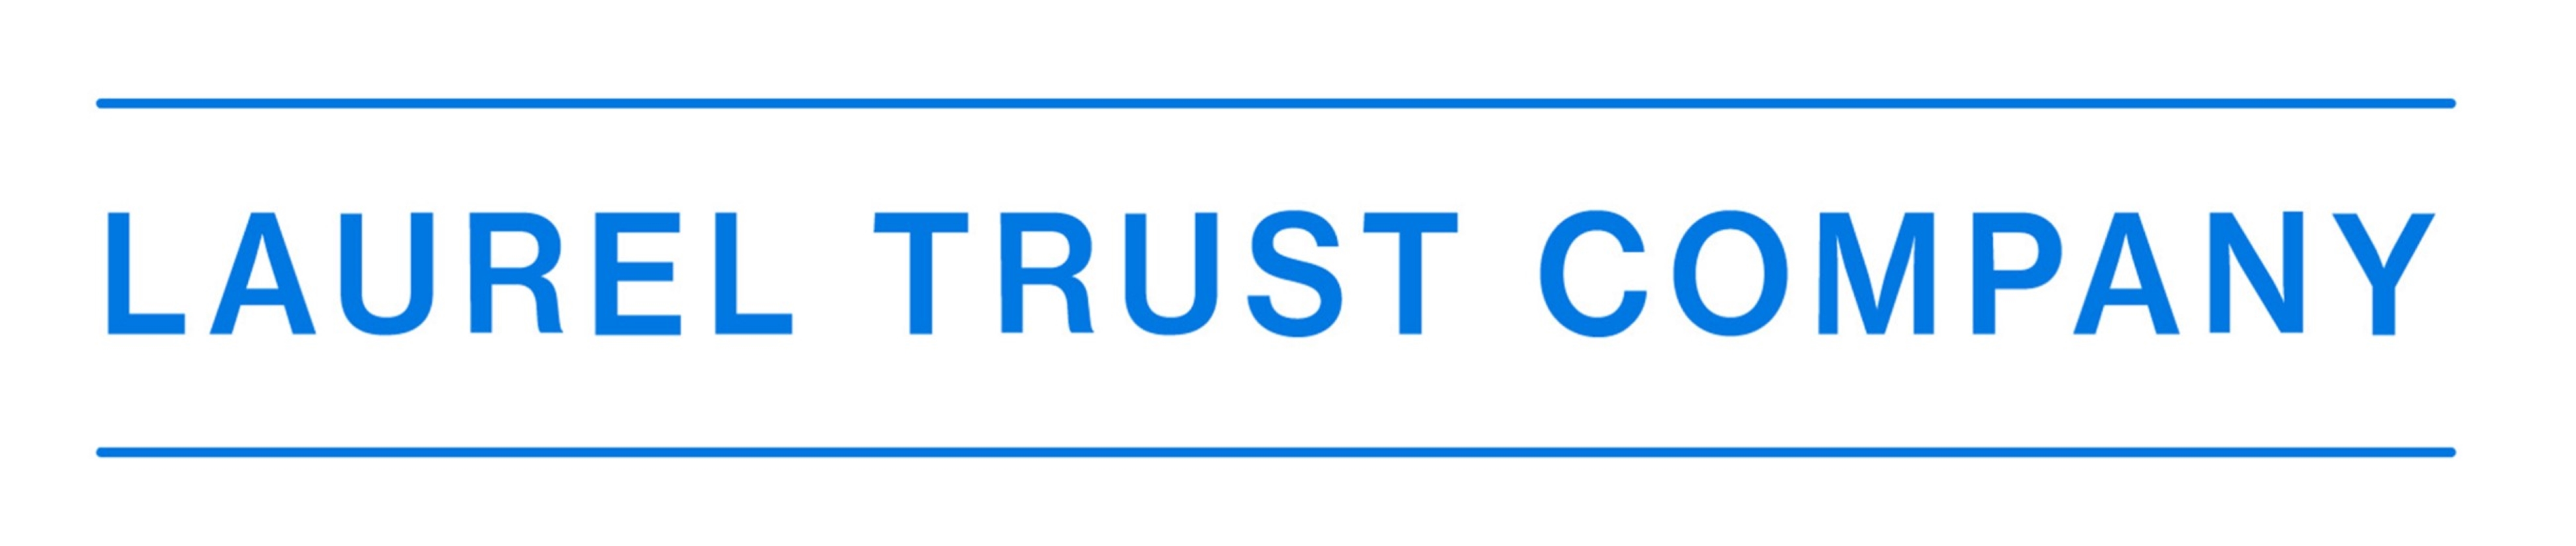 Laurel Trust Company